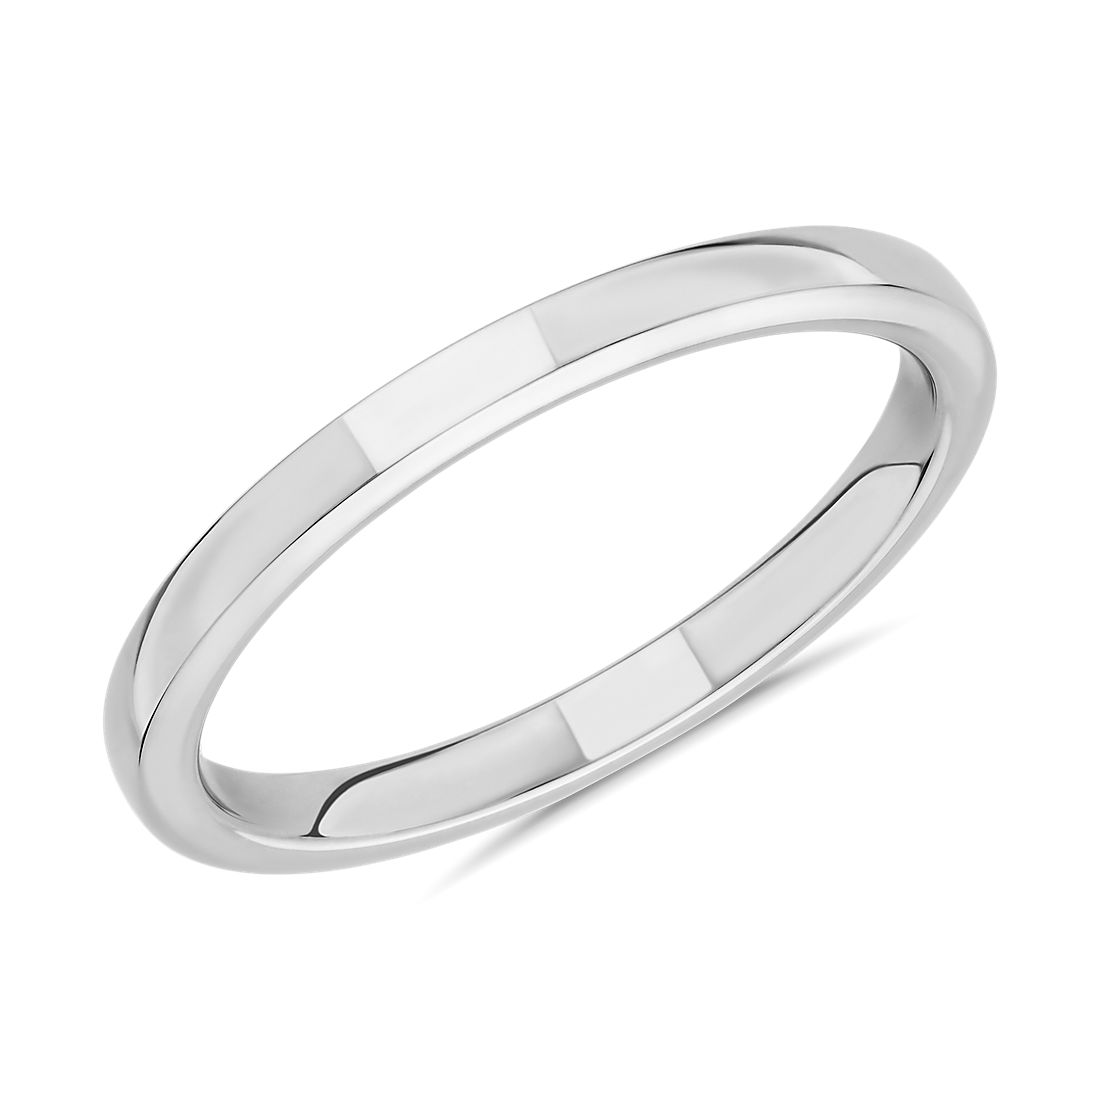 Skyline Comfort Fit Wedding Ring in 14k White Gold (2 mm)